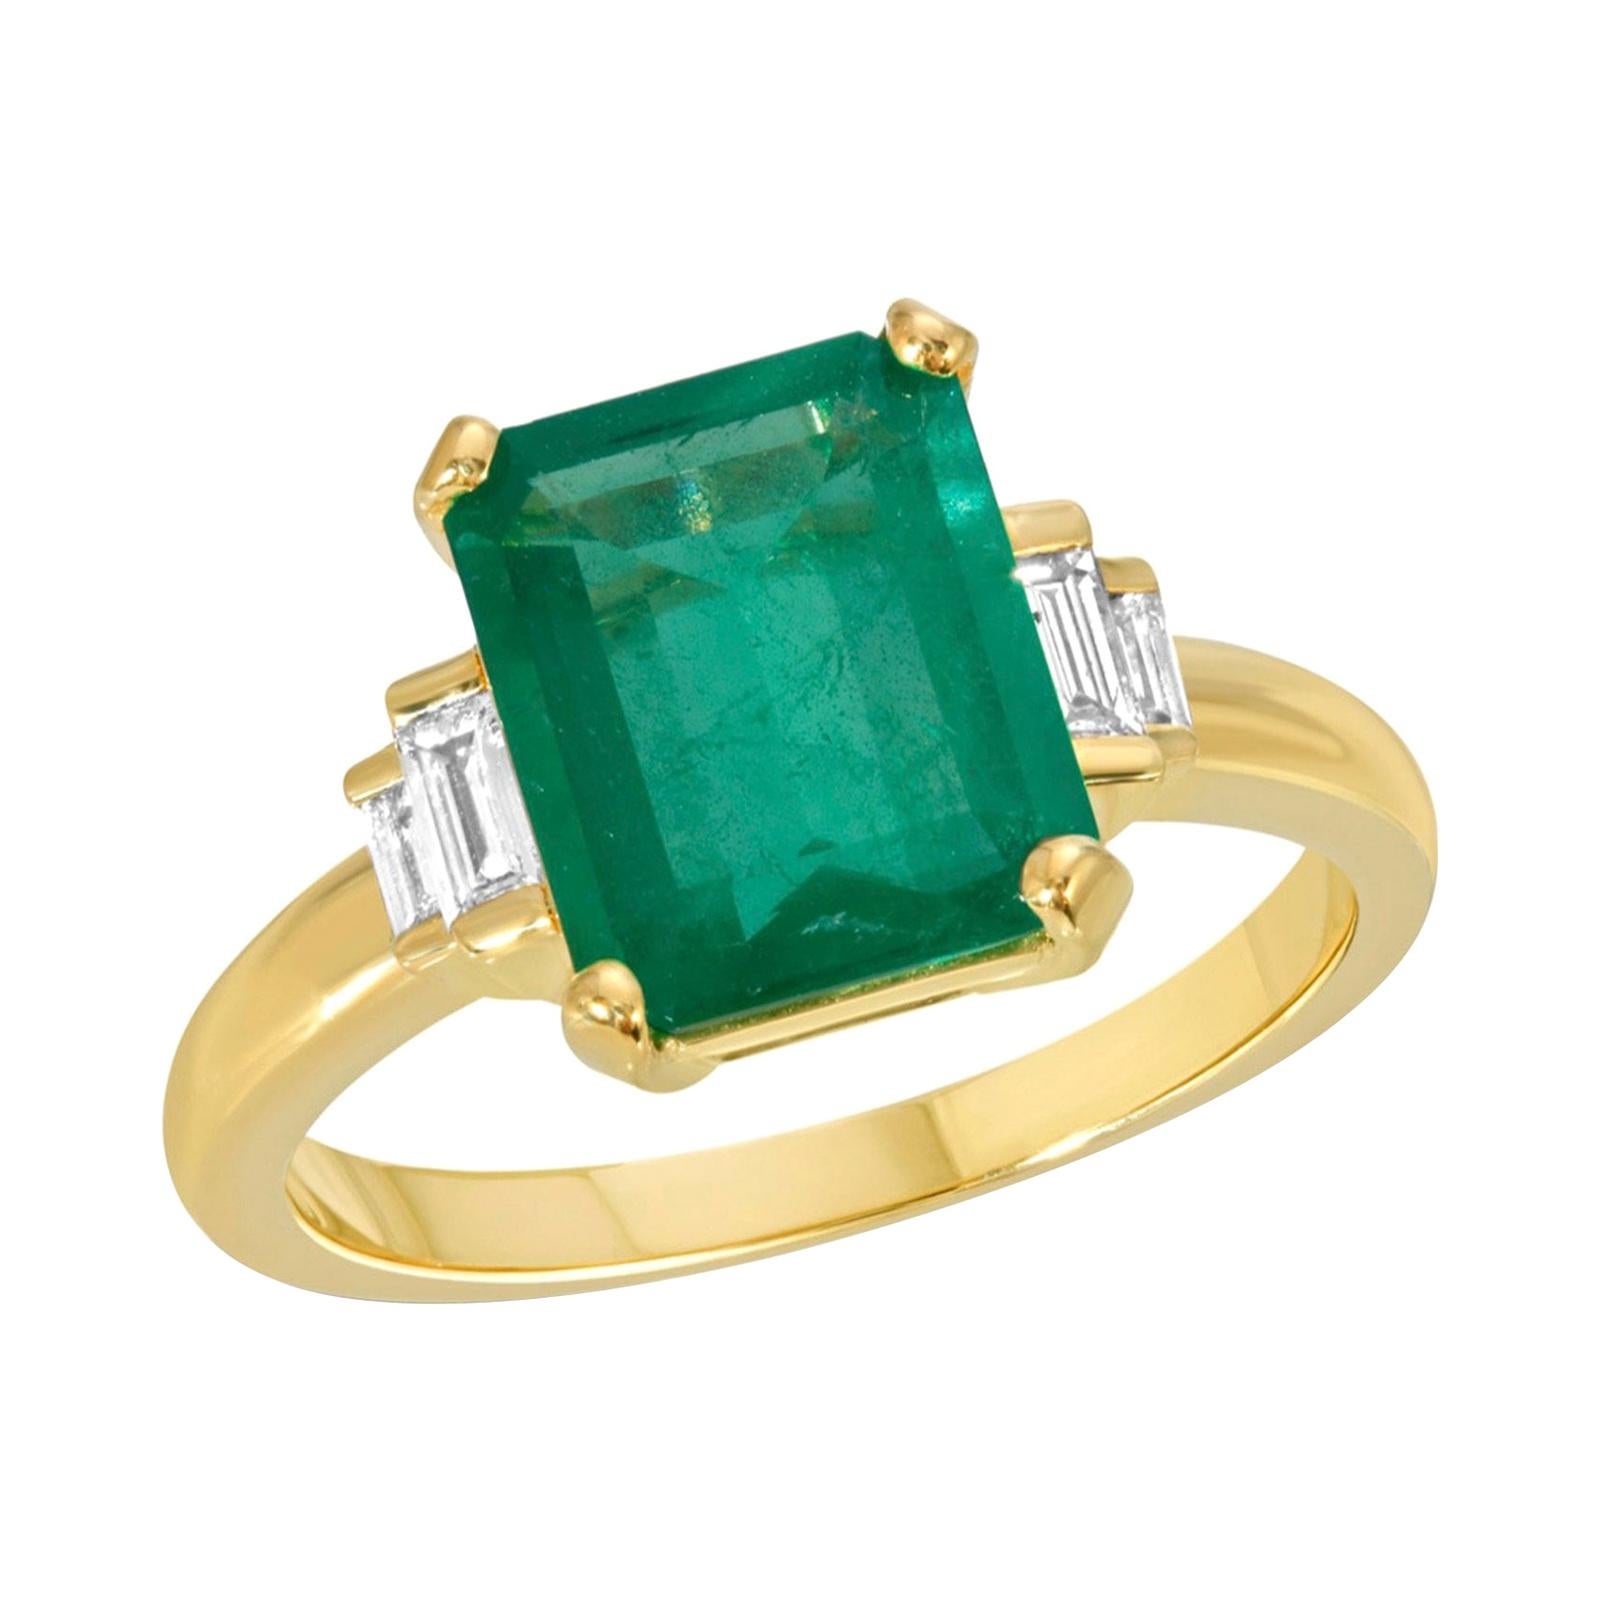 2.48 Ct Zambian Emerald & 0.18 Ct Diamonds in 14k Yellow Gold Engagement Ring